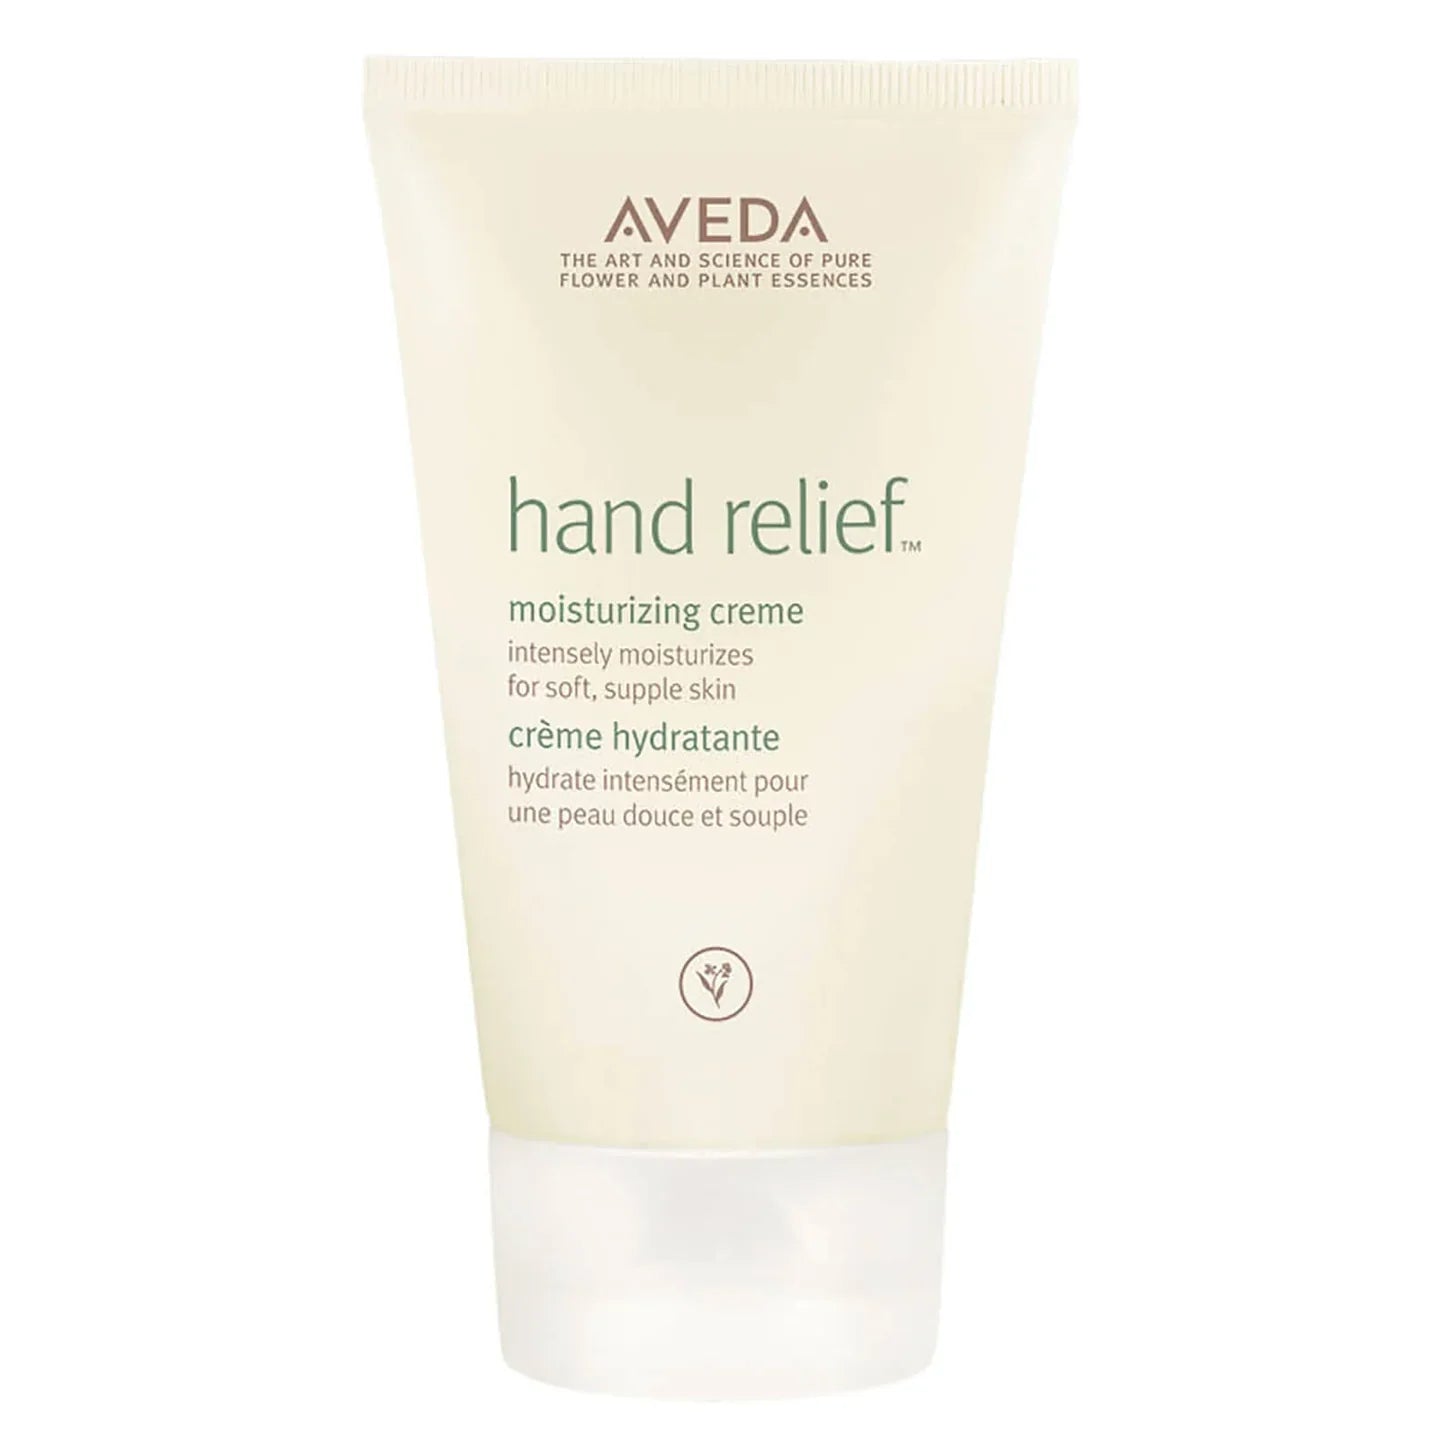 Aveda Hand Relief Moisturising Creme - 125ml - Glow Addict Luxe